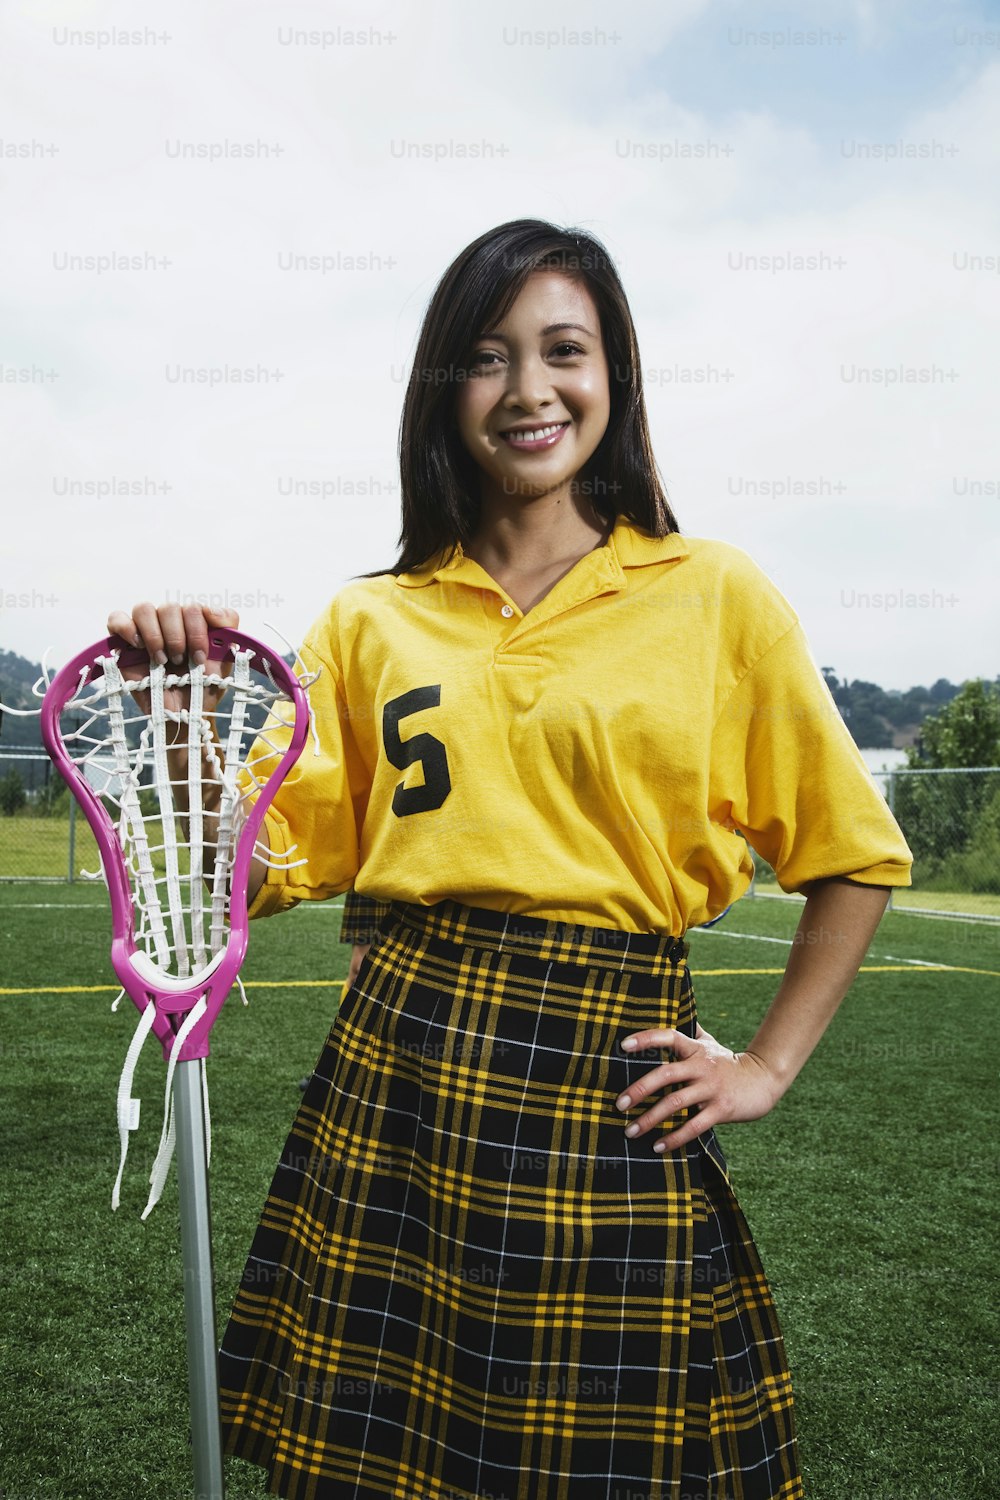 a girl in a skirt holding a tennis racket